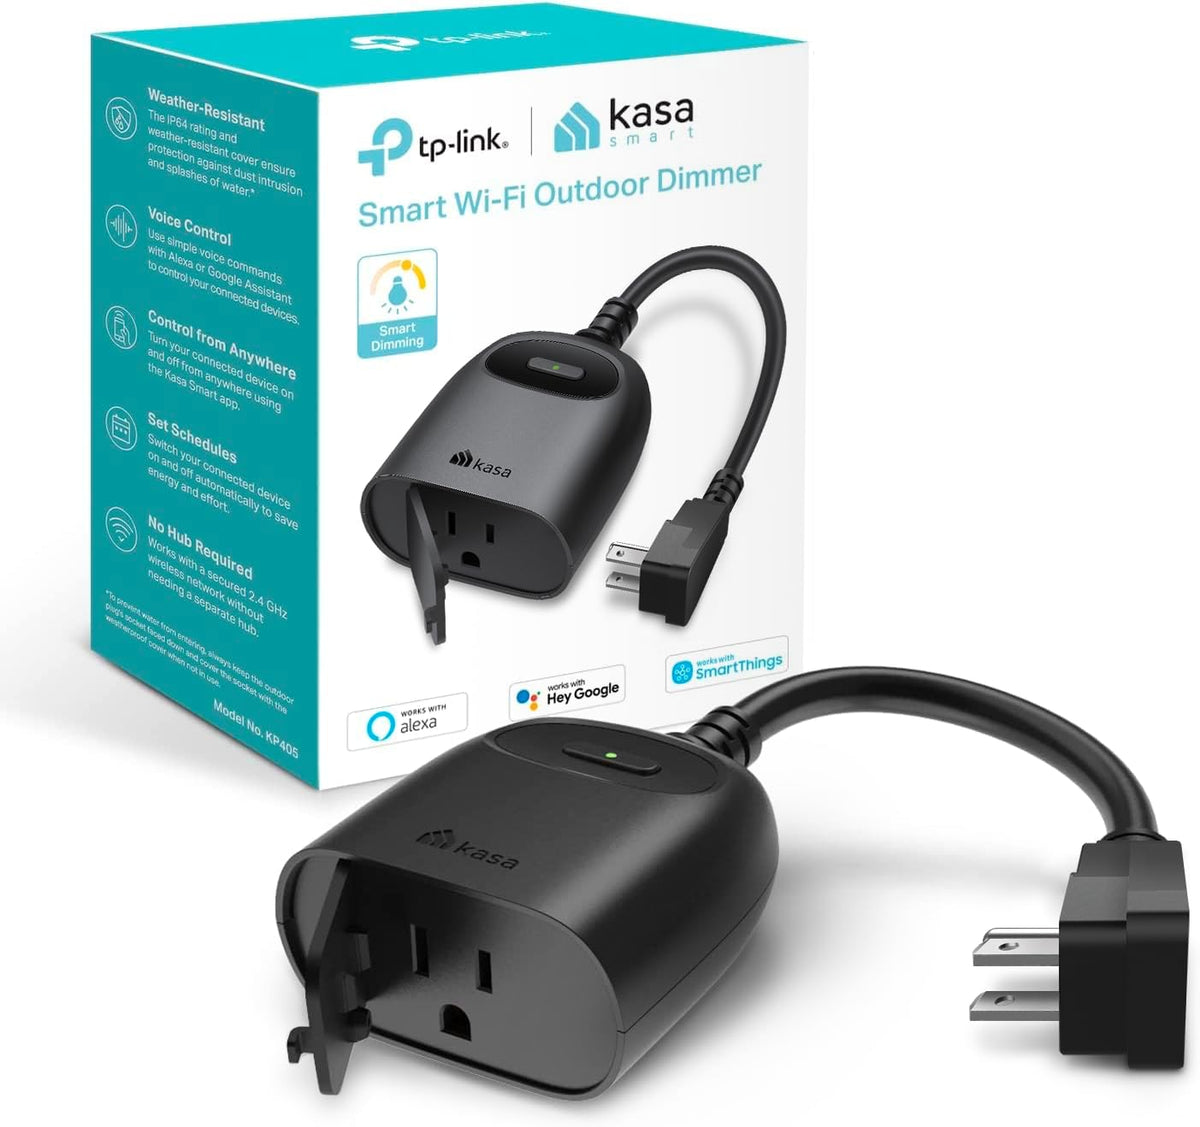 Kasa Smart Plug Classic 15A, Smart Home Wi-Fi Outlet Works with